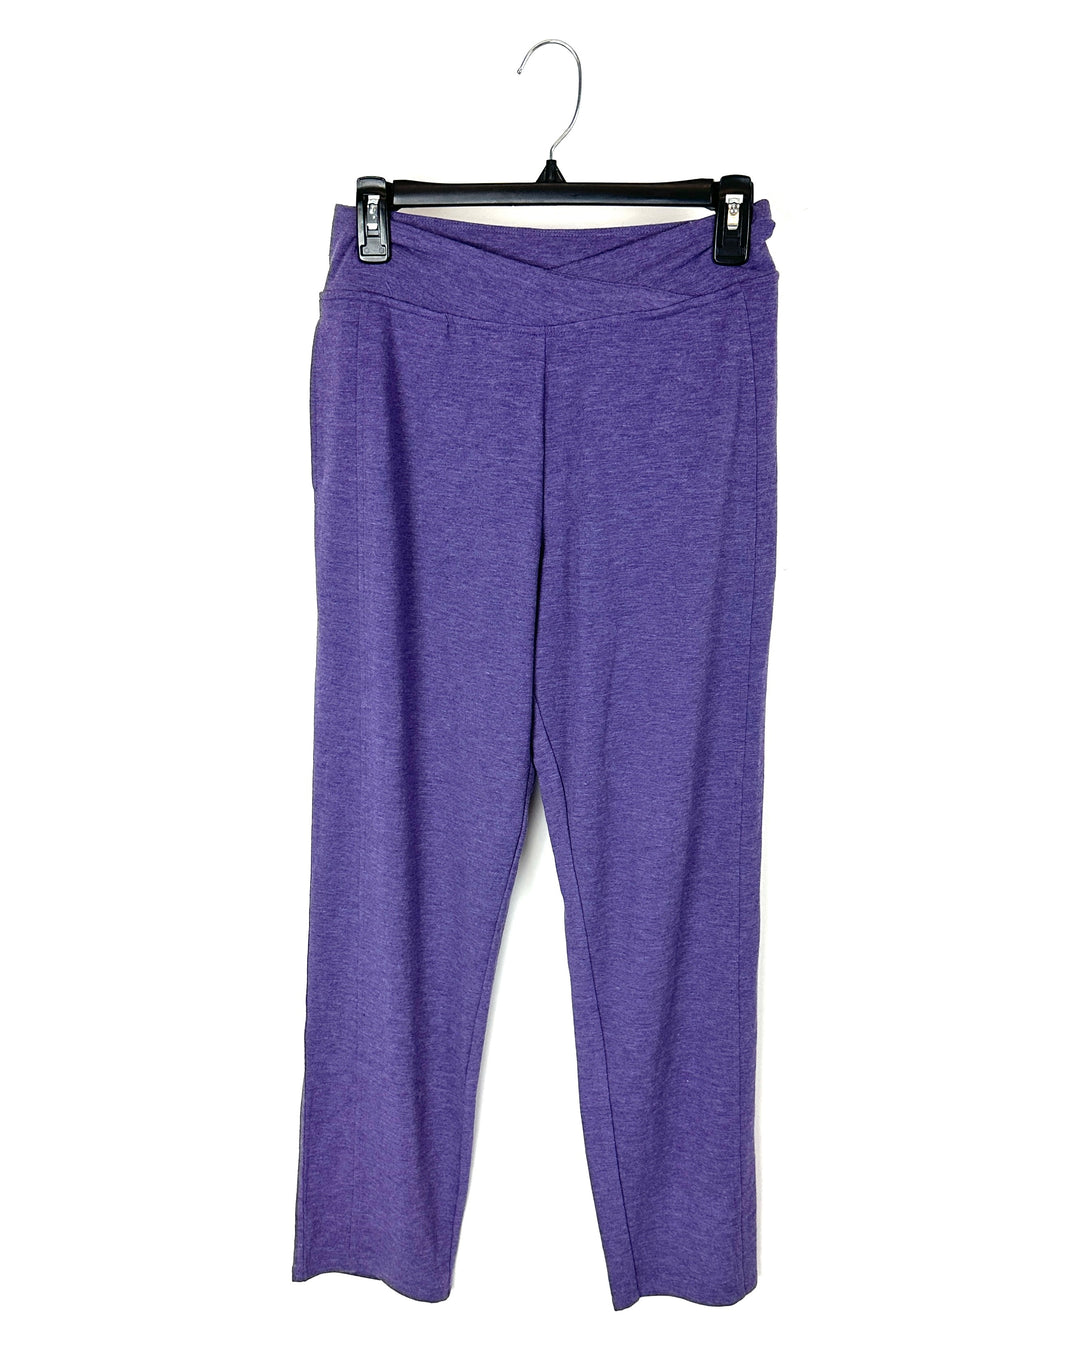 Purple Pants - Size 4/6